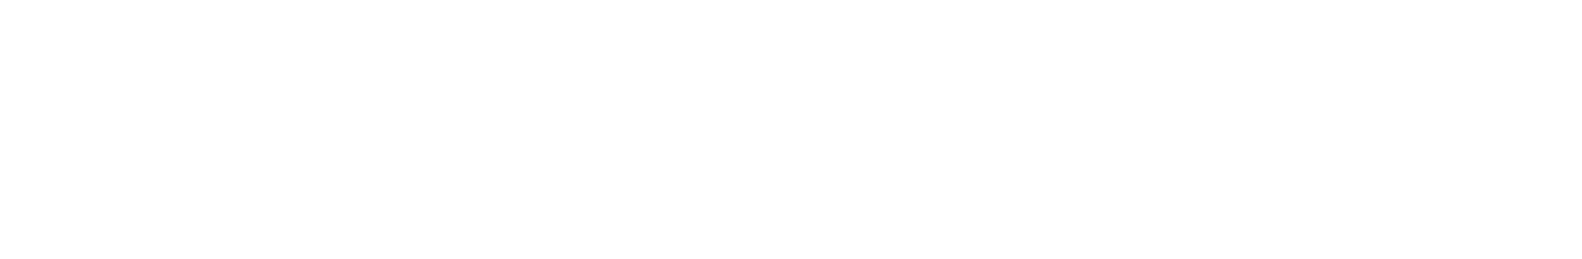 Japan Post Bank
 Logo groß für dunkle Hintergründe (transparentes PNG)